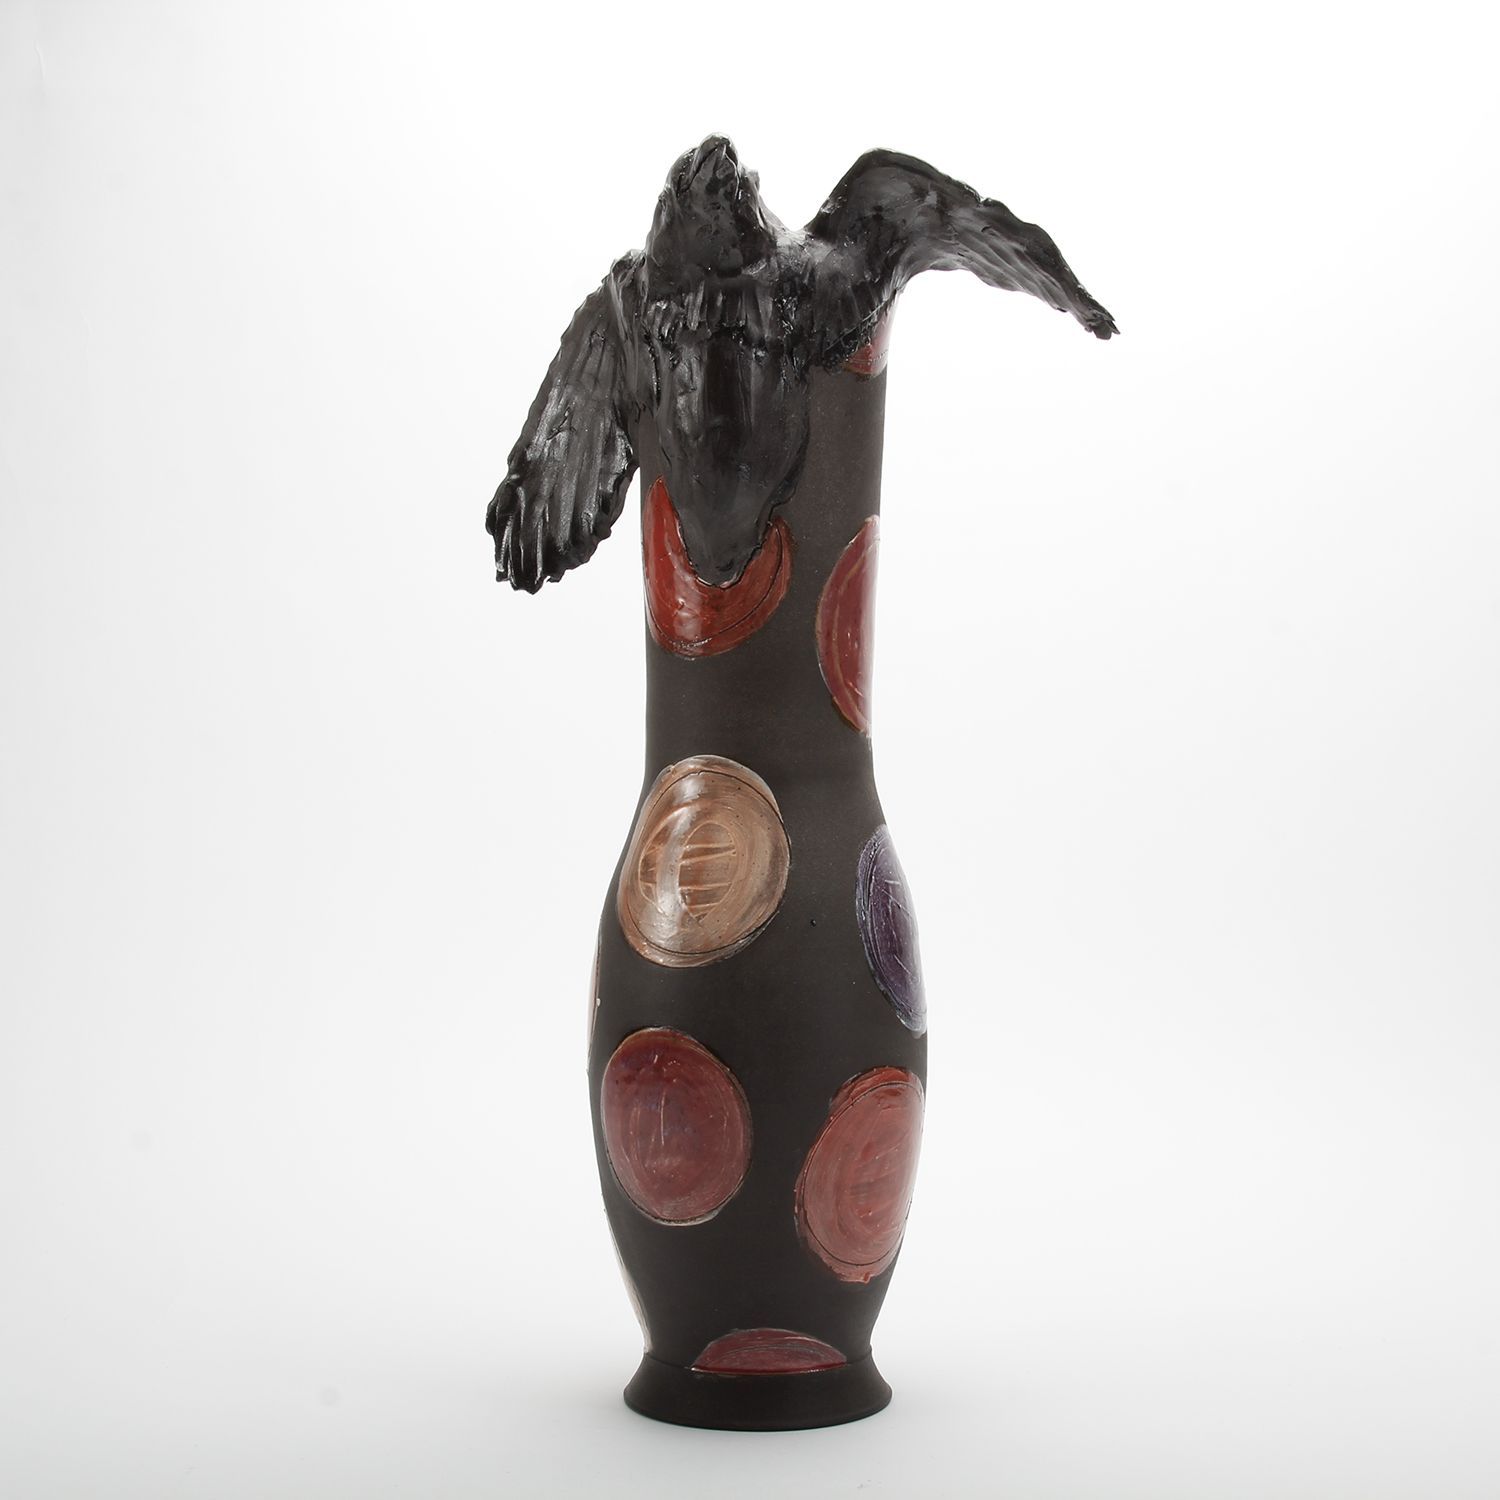 Marla Benton: Sculpture Vase Product Image 5 of 5